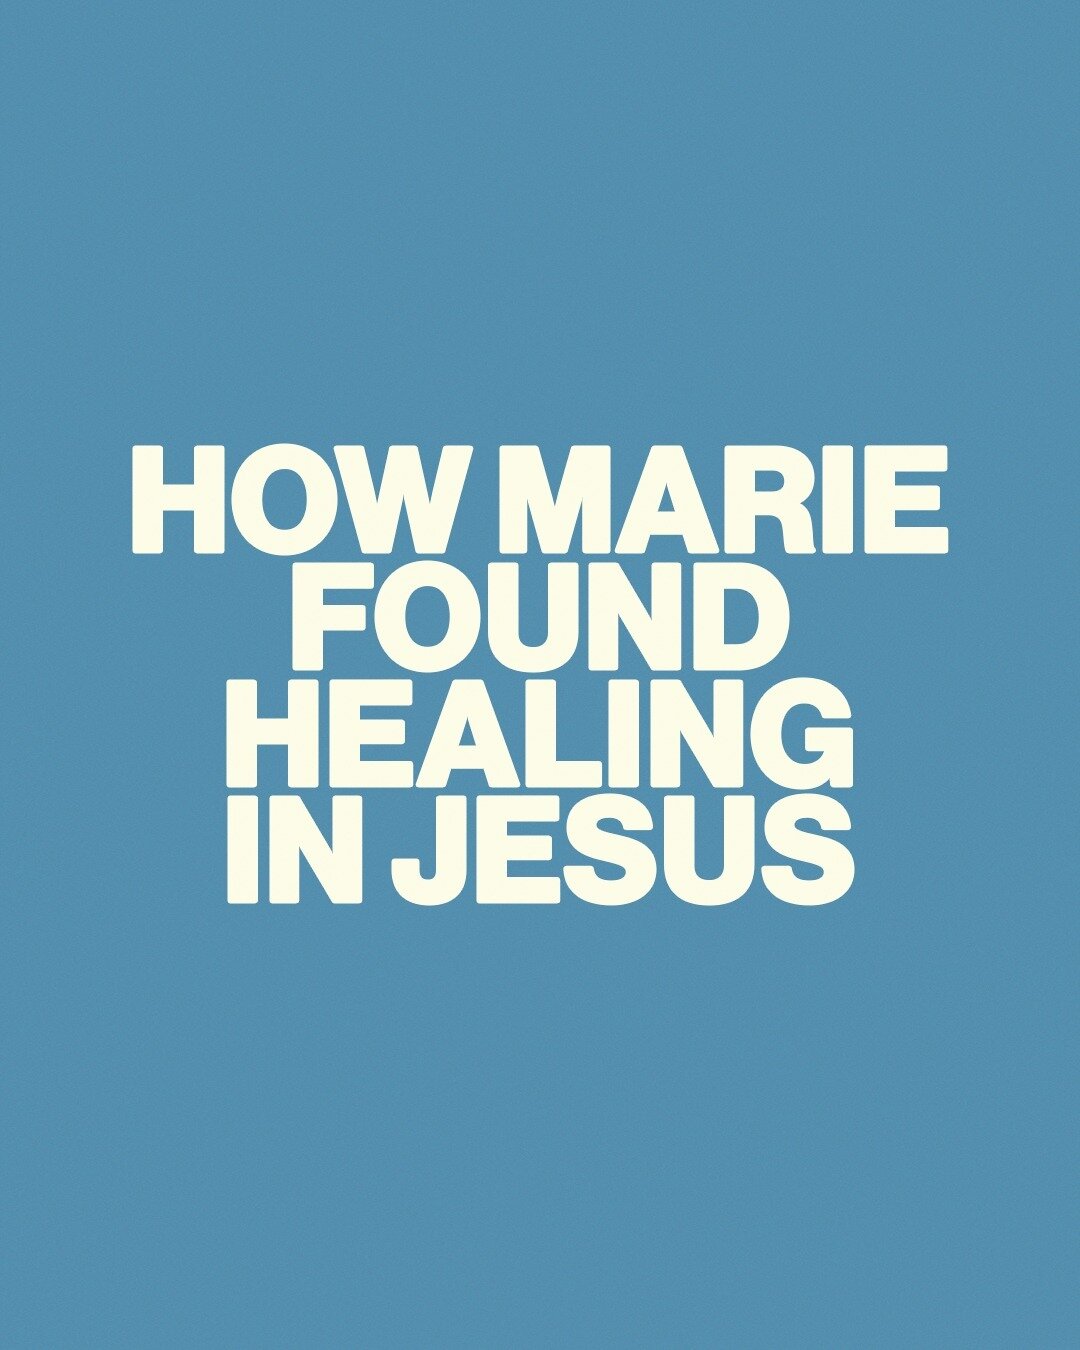 HOW MARIE FOUND HEALING IN JESUS
ㅤ
#jesus #faith #godslove